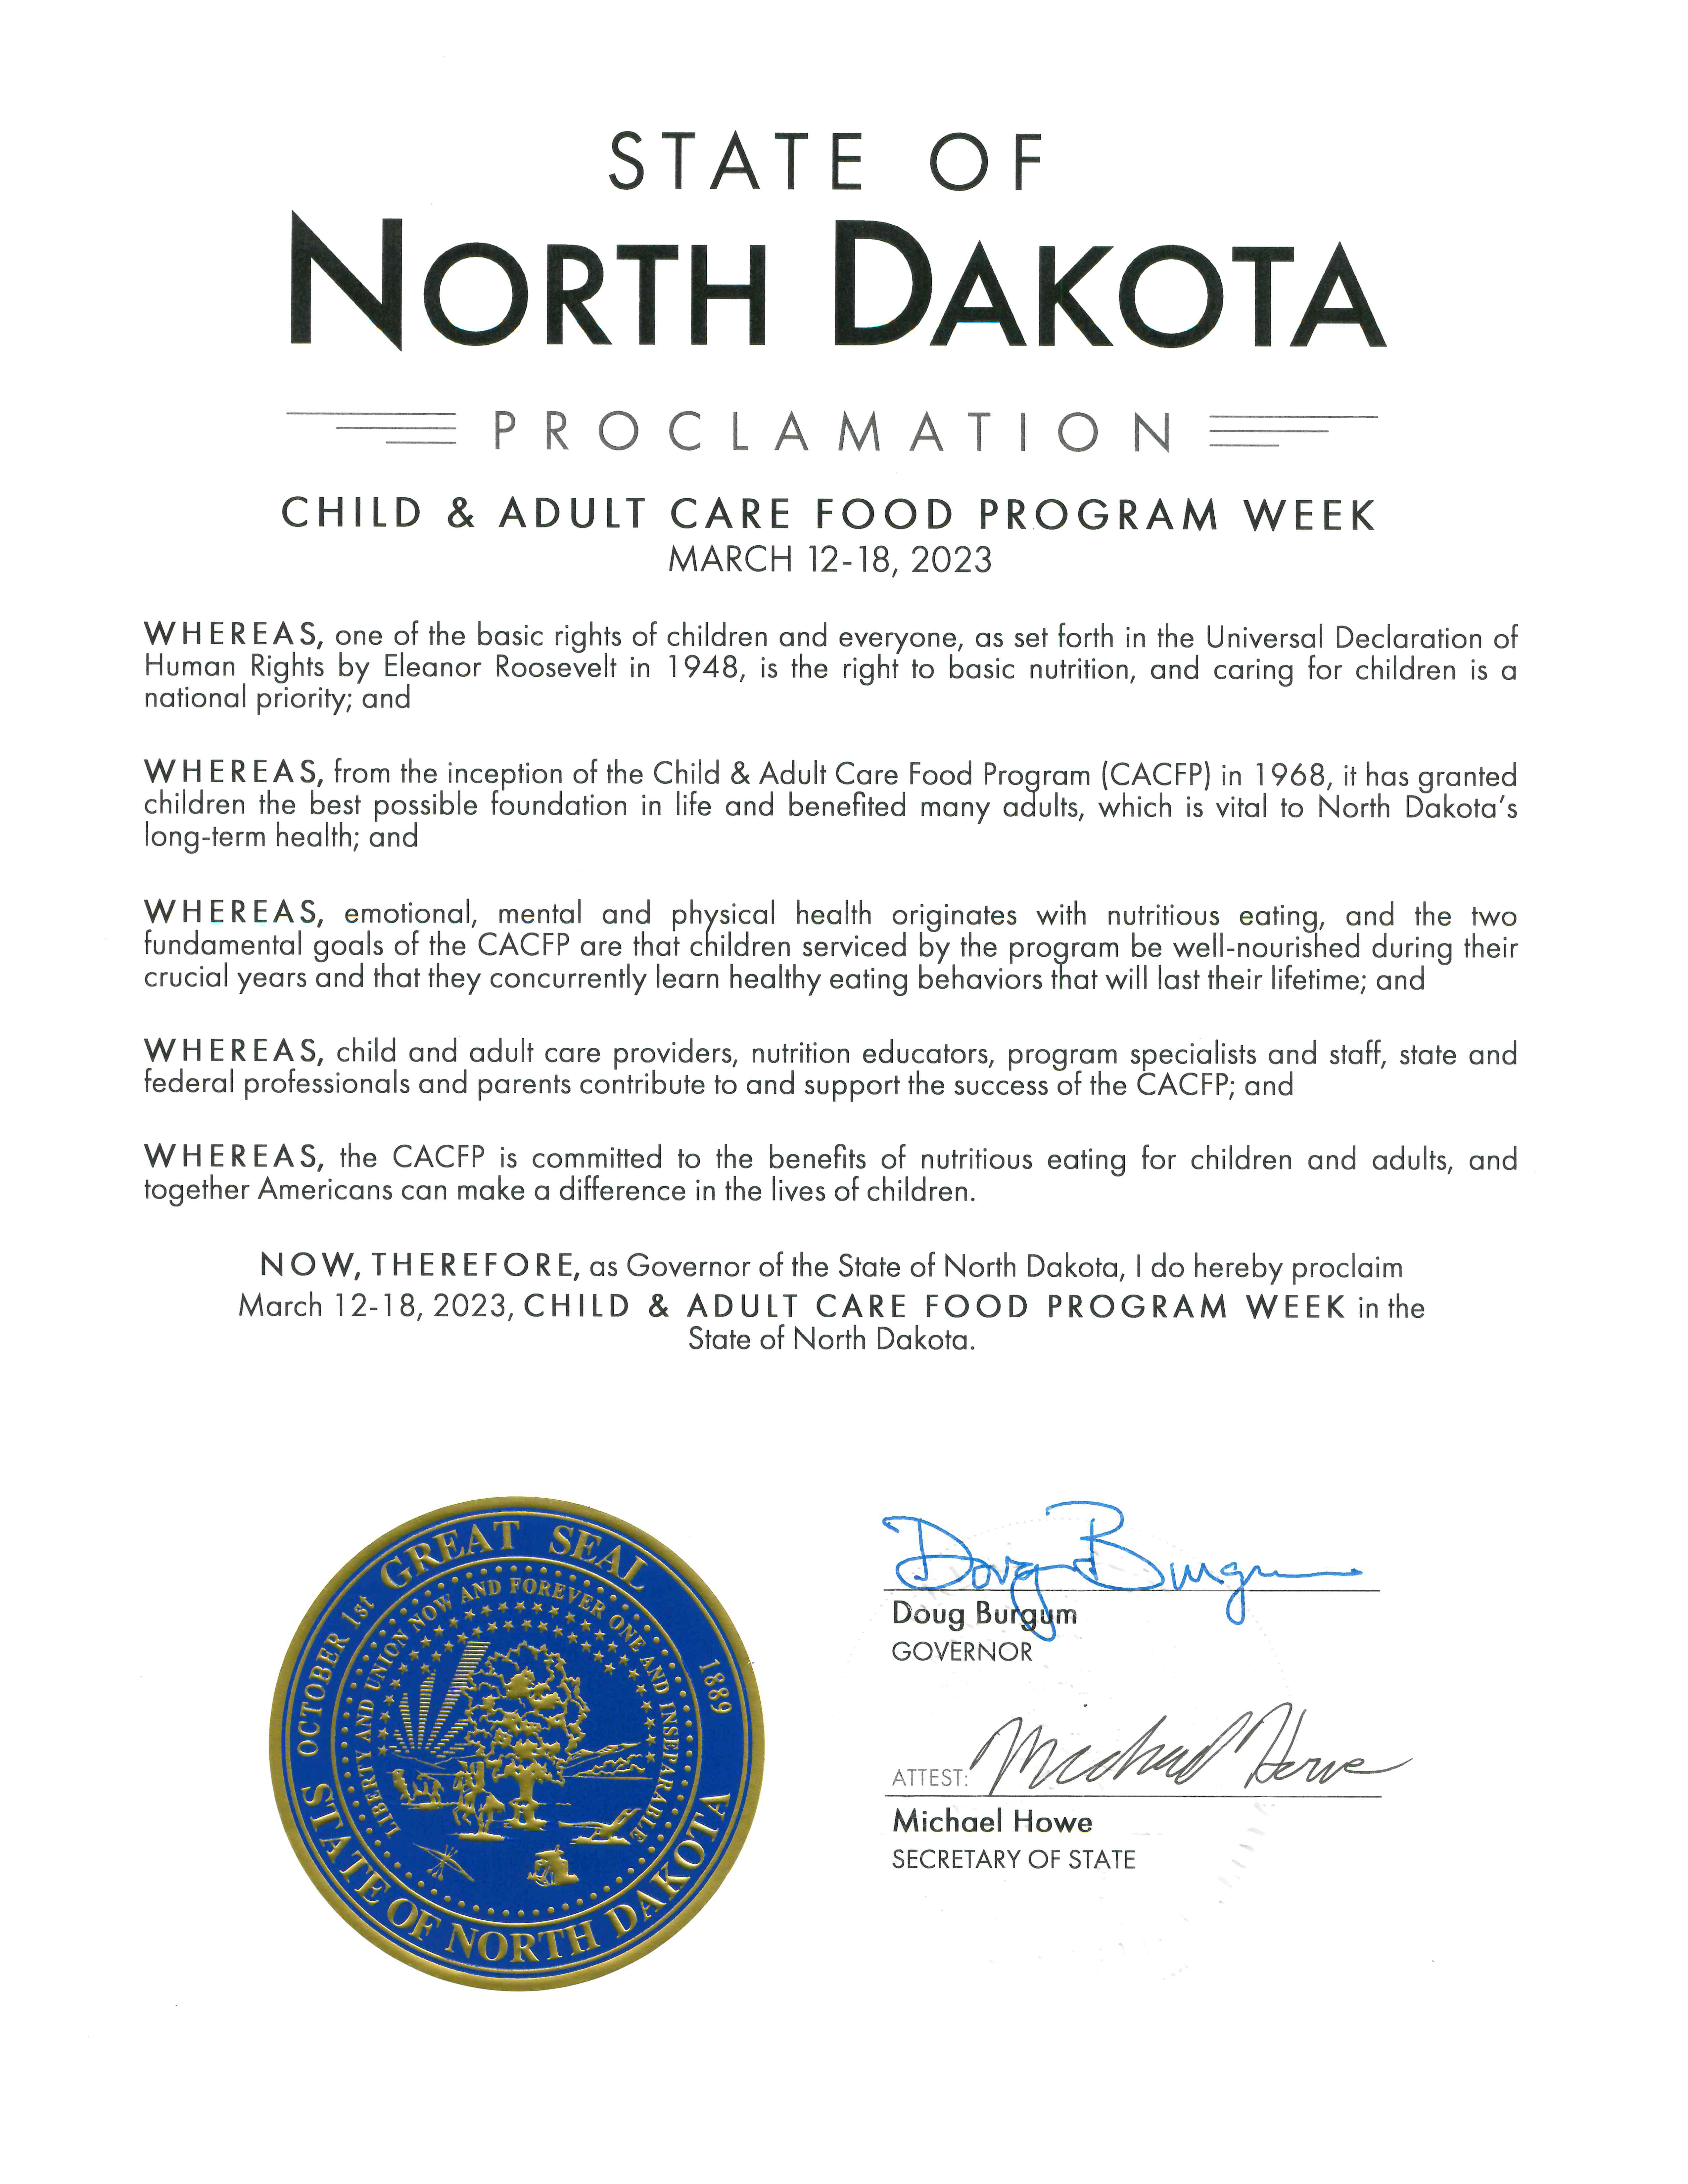 North Dakota Proclamation